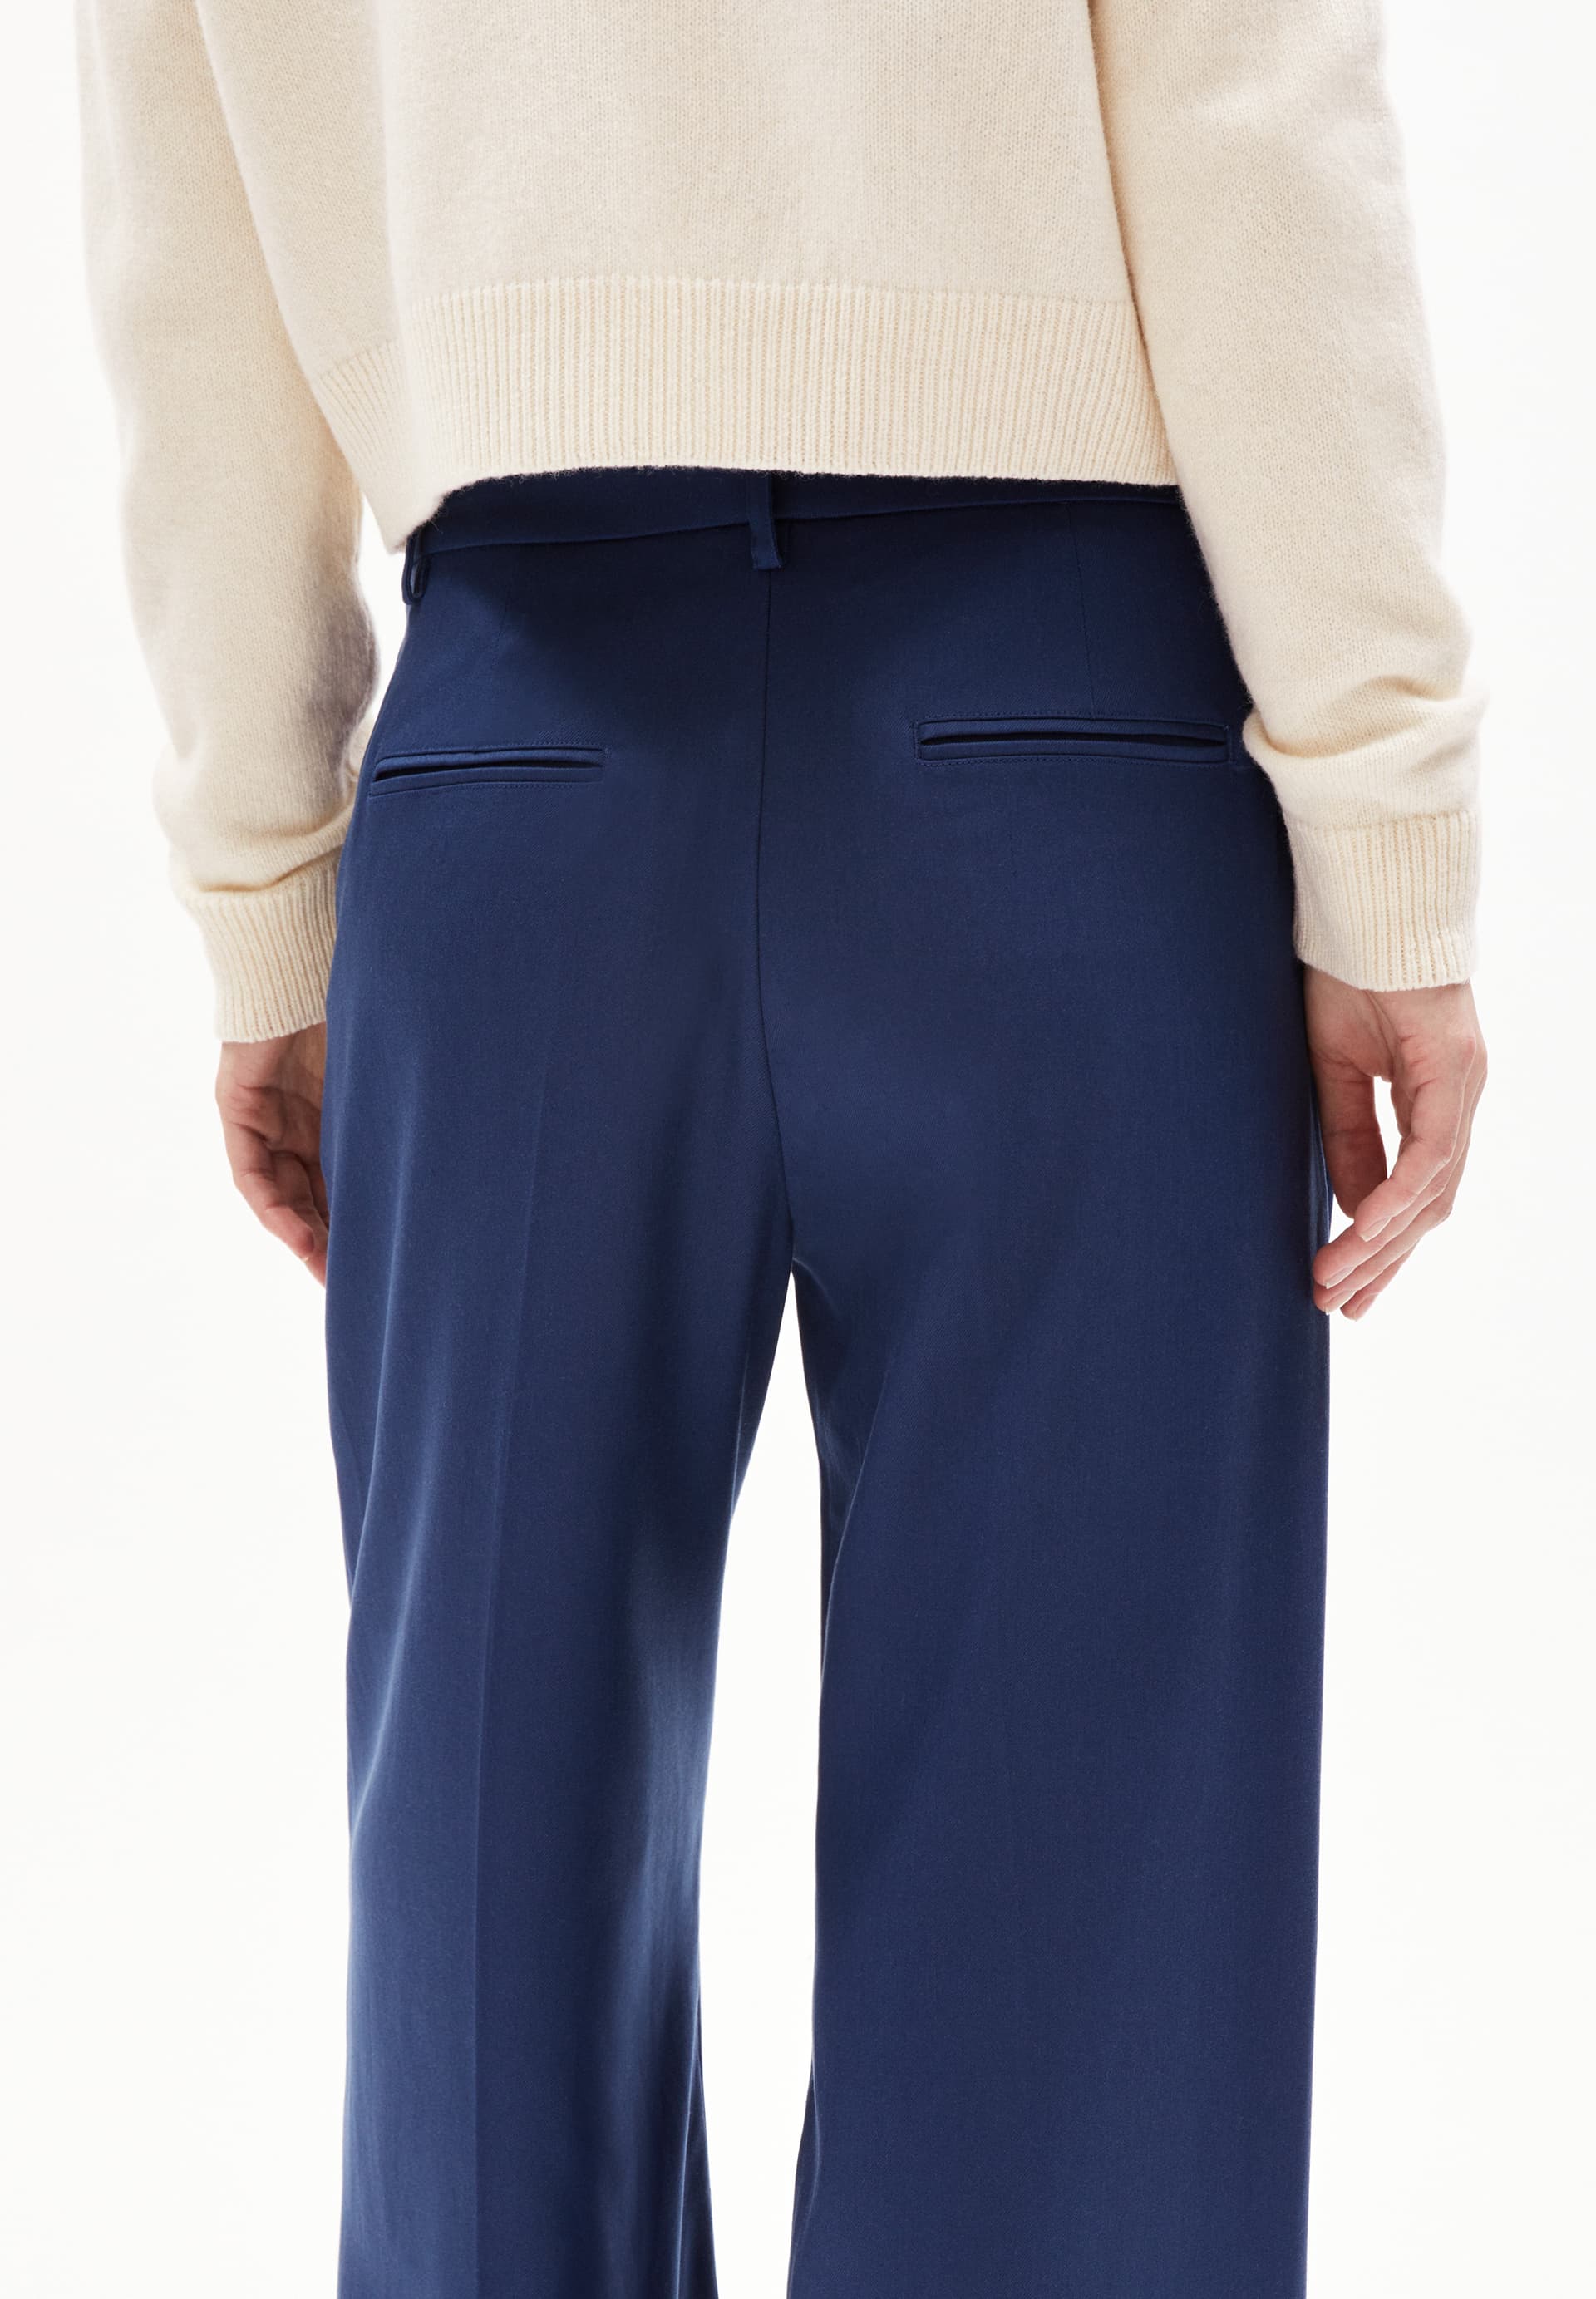 LEANDRAA Woven Pants made of TENCEL™ Lyocell Mix